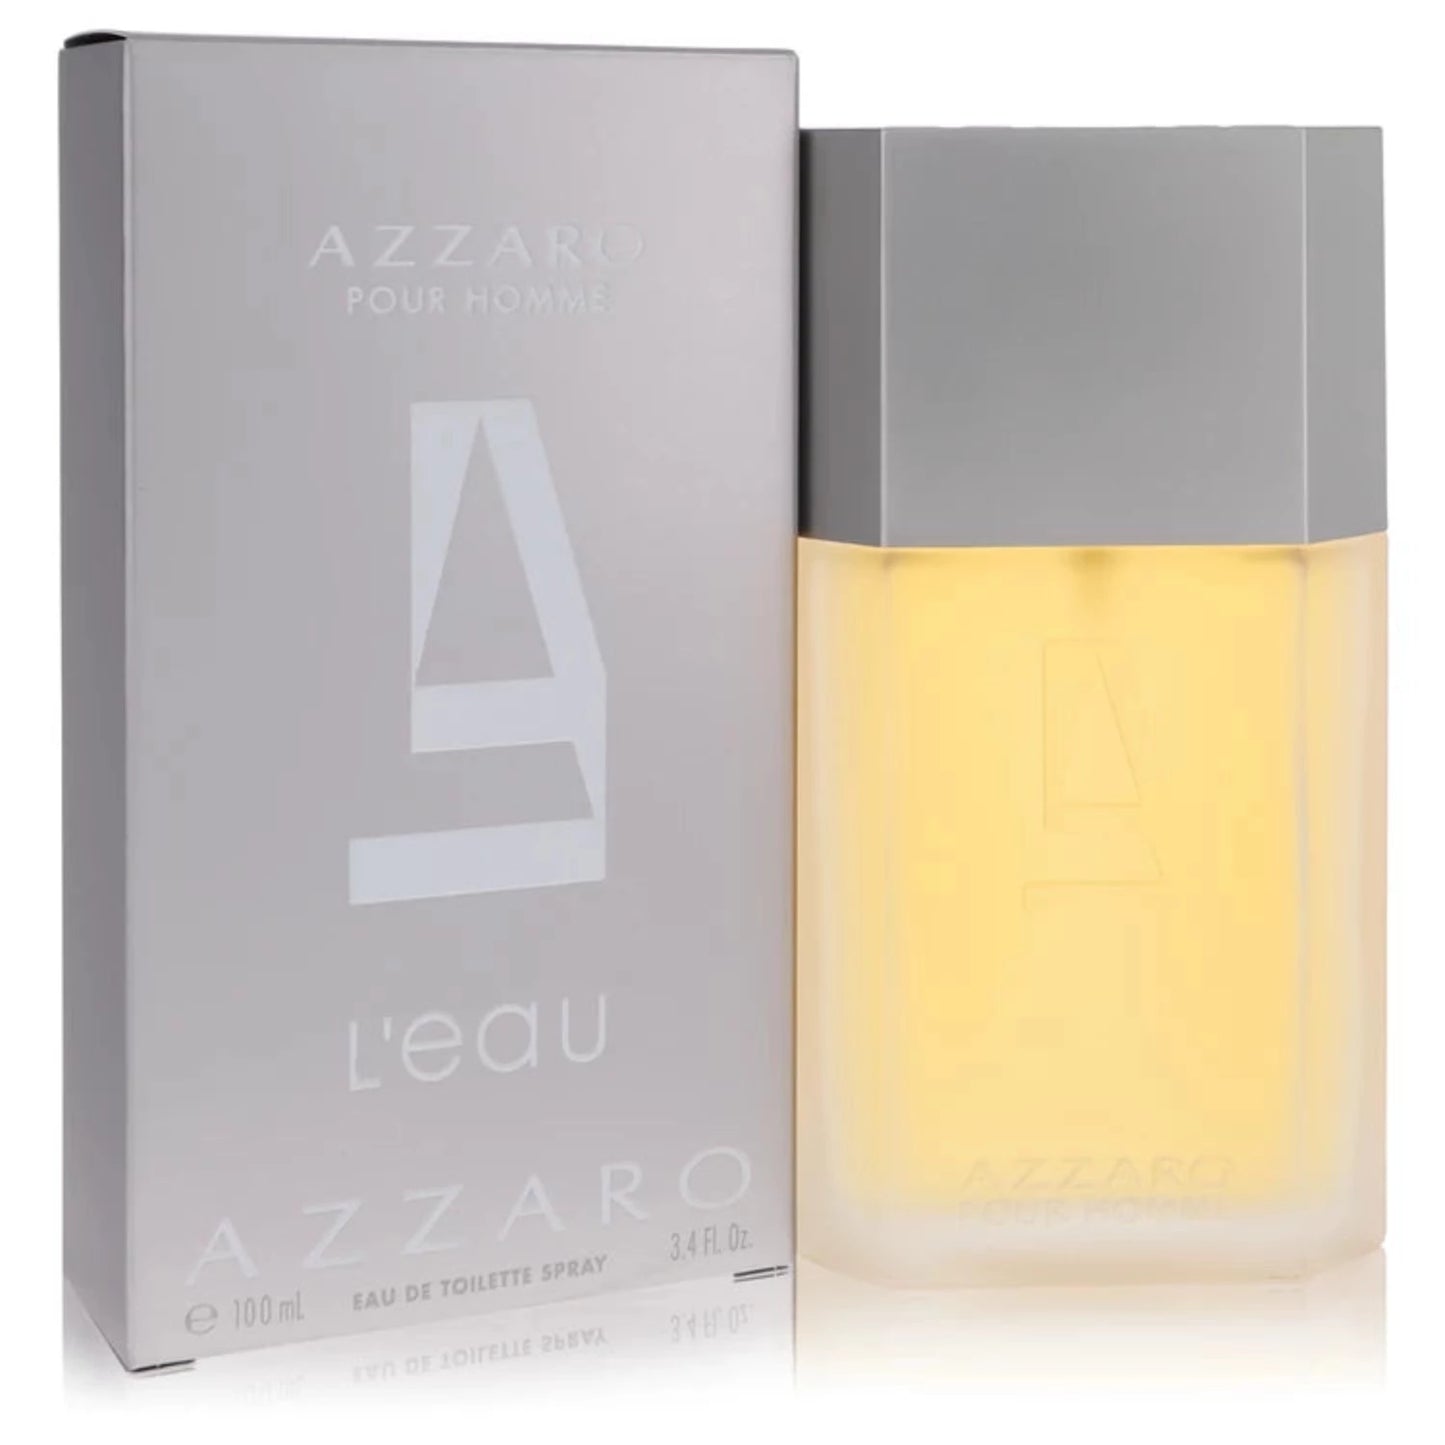 Azzaro L'eau Eau De Toilette Spray By Azzaro for men